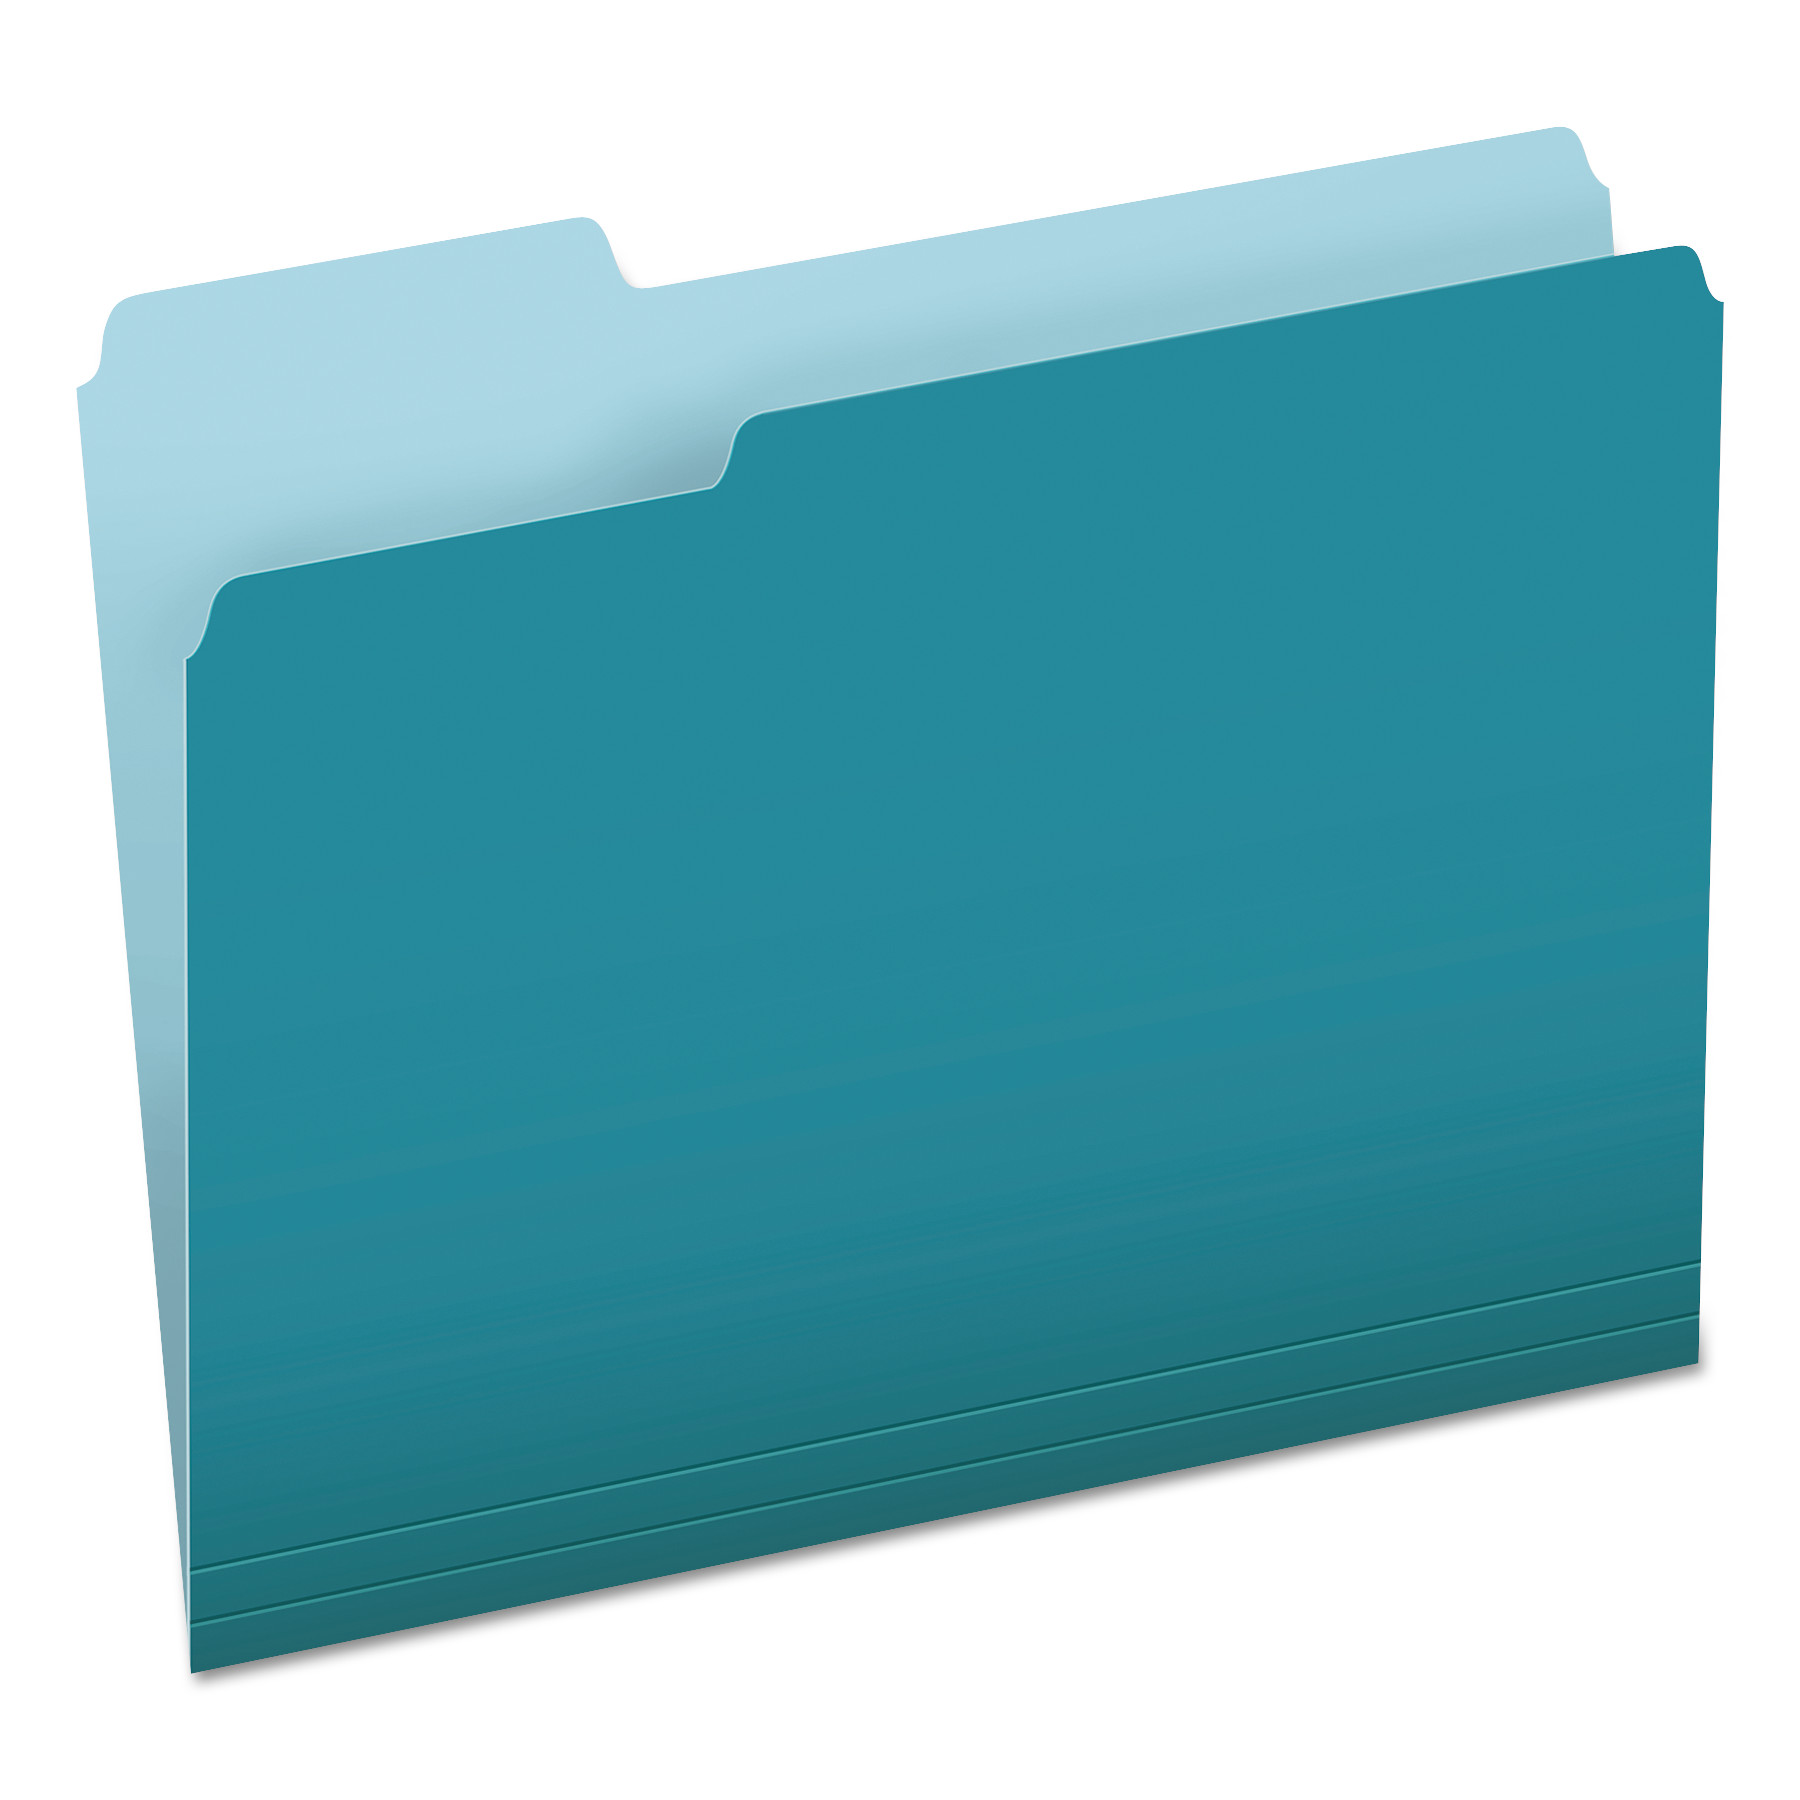  Pendaflex 152 1/3 TEA Colored File Folders, 1/3-Cut Tabs, Letter Size, Teal/Light Teal, 100/Box (PFX15213TEA) 